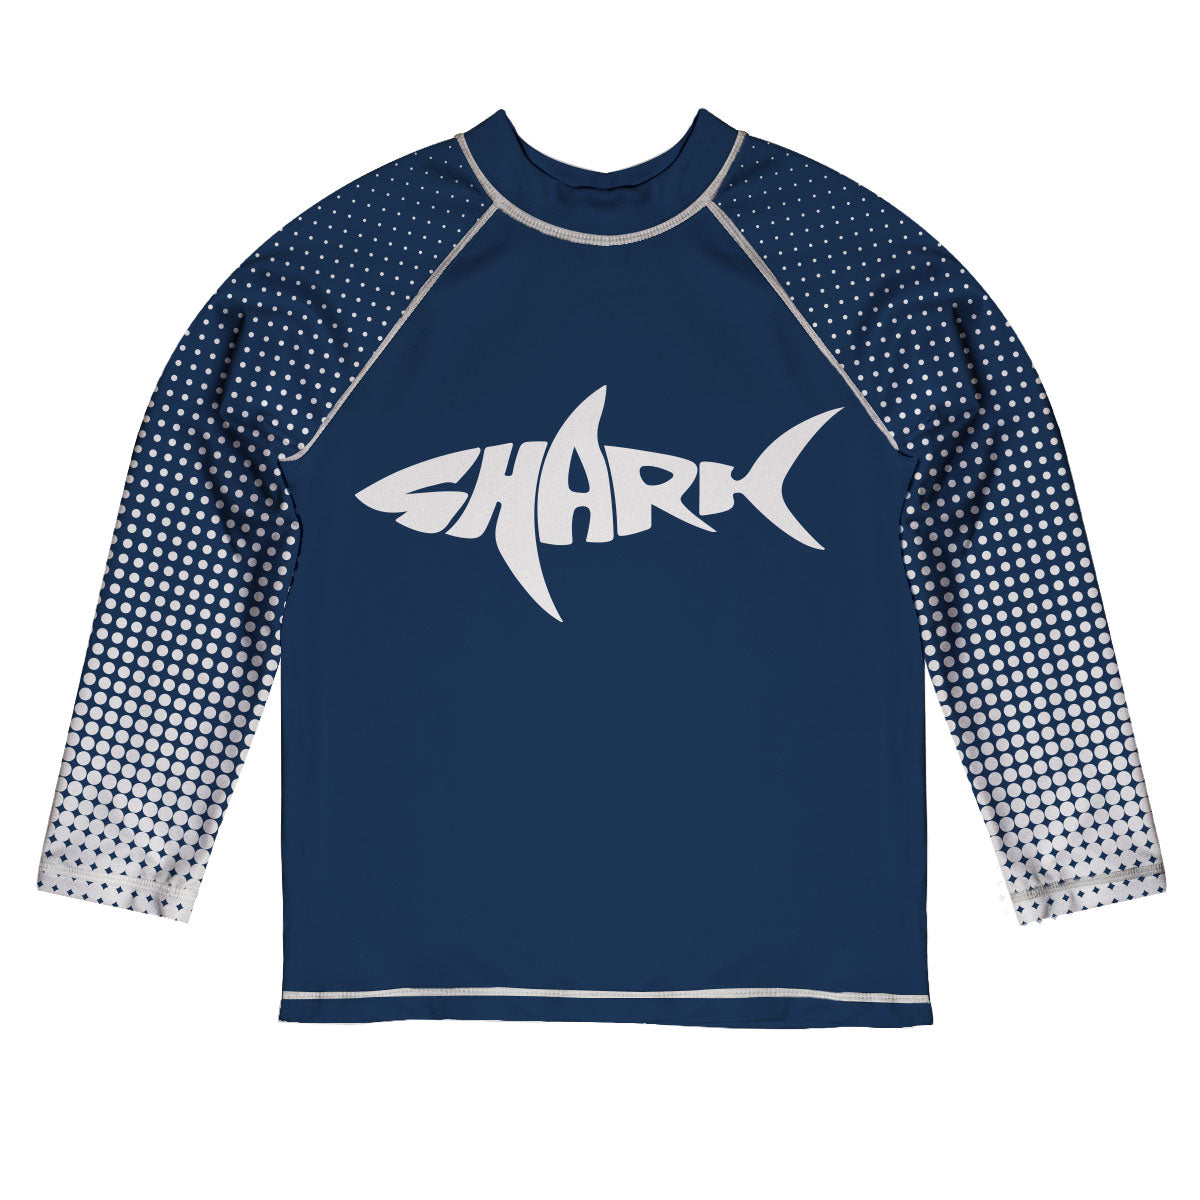 Shark Navy Long Sleeve Rash Guard - Wimziy&Co.